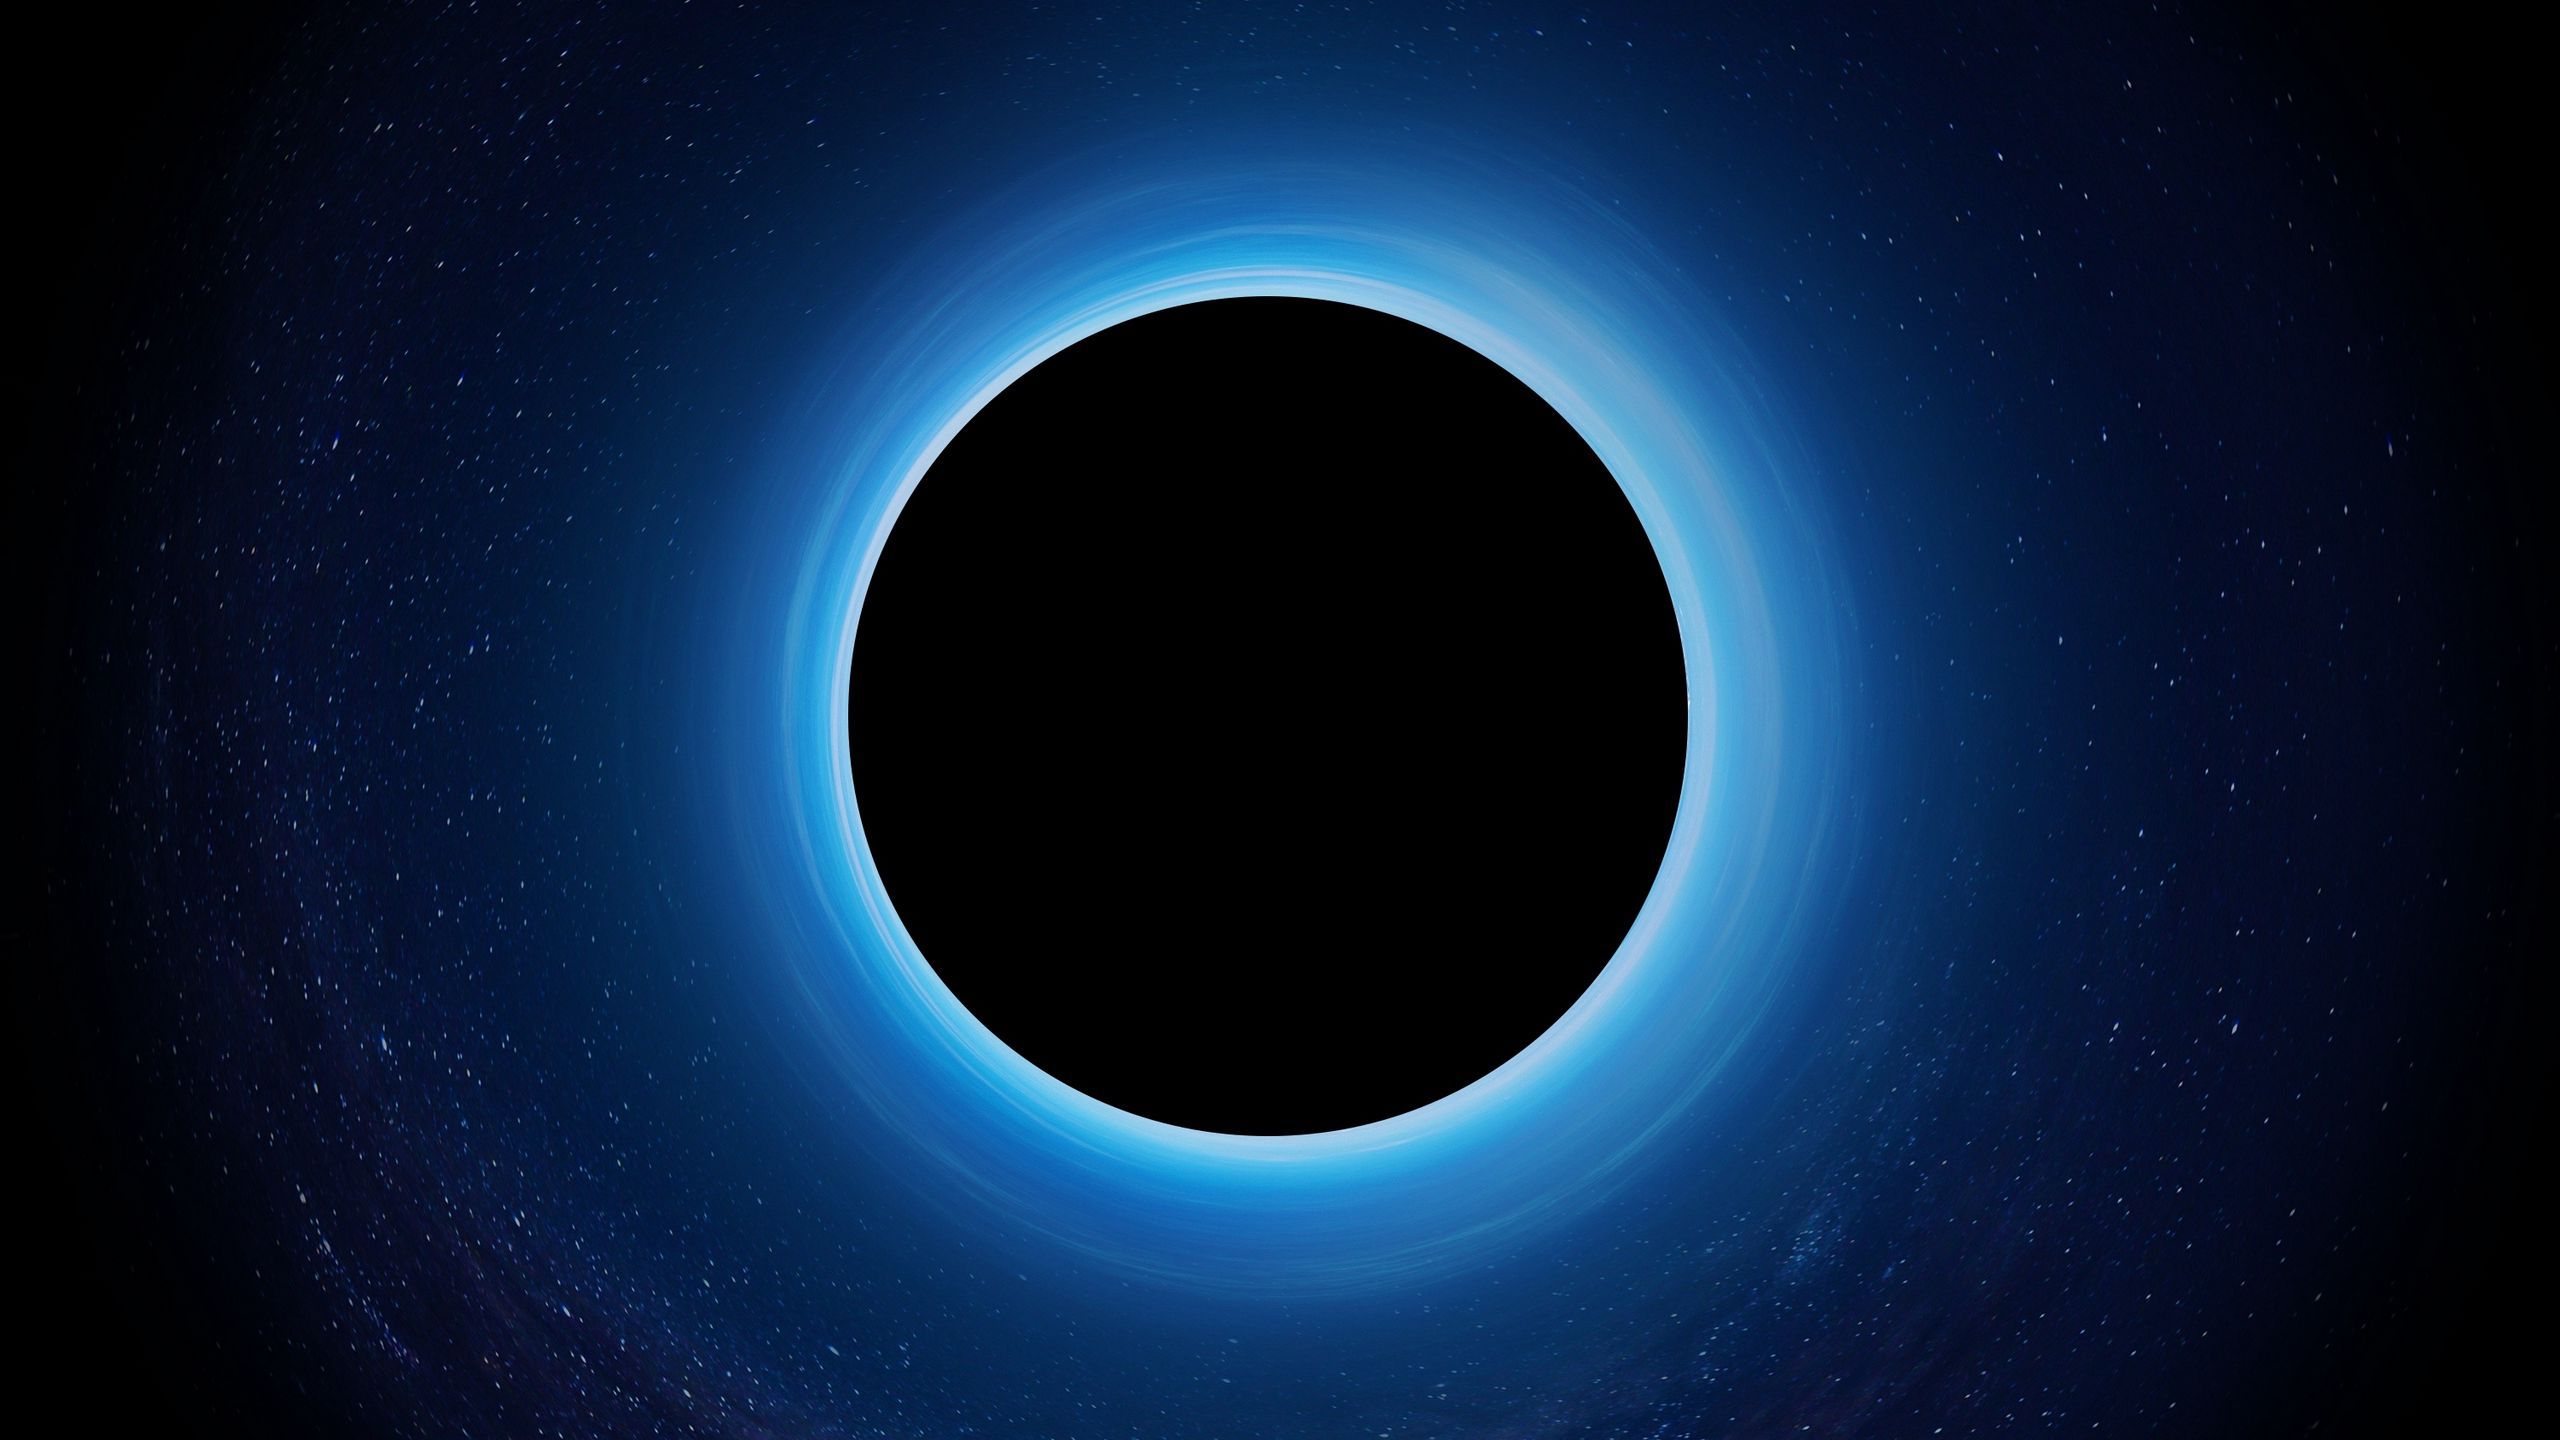 Download wallpaper 2560x1440 black hole, eclipse, stars